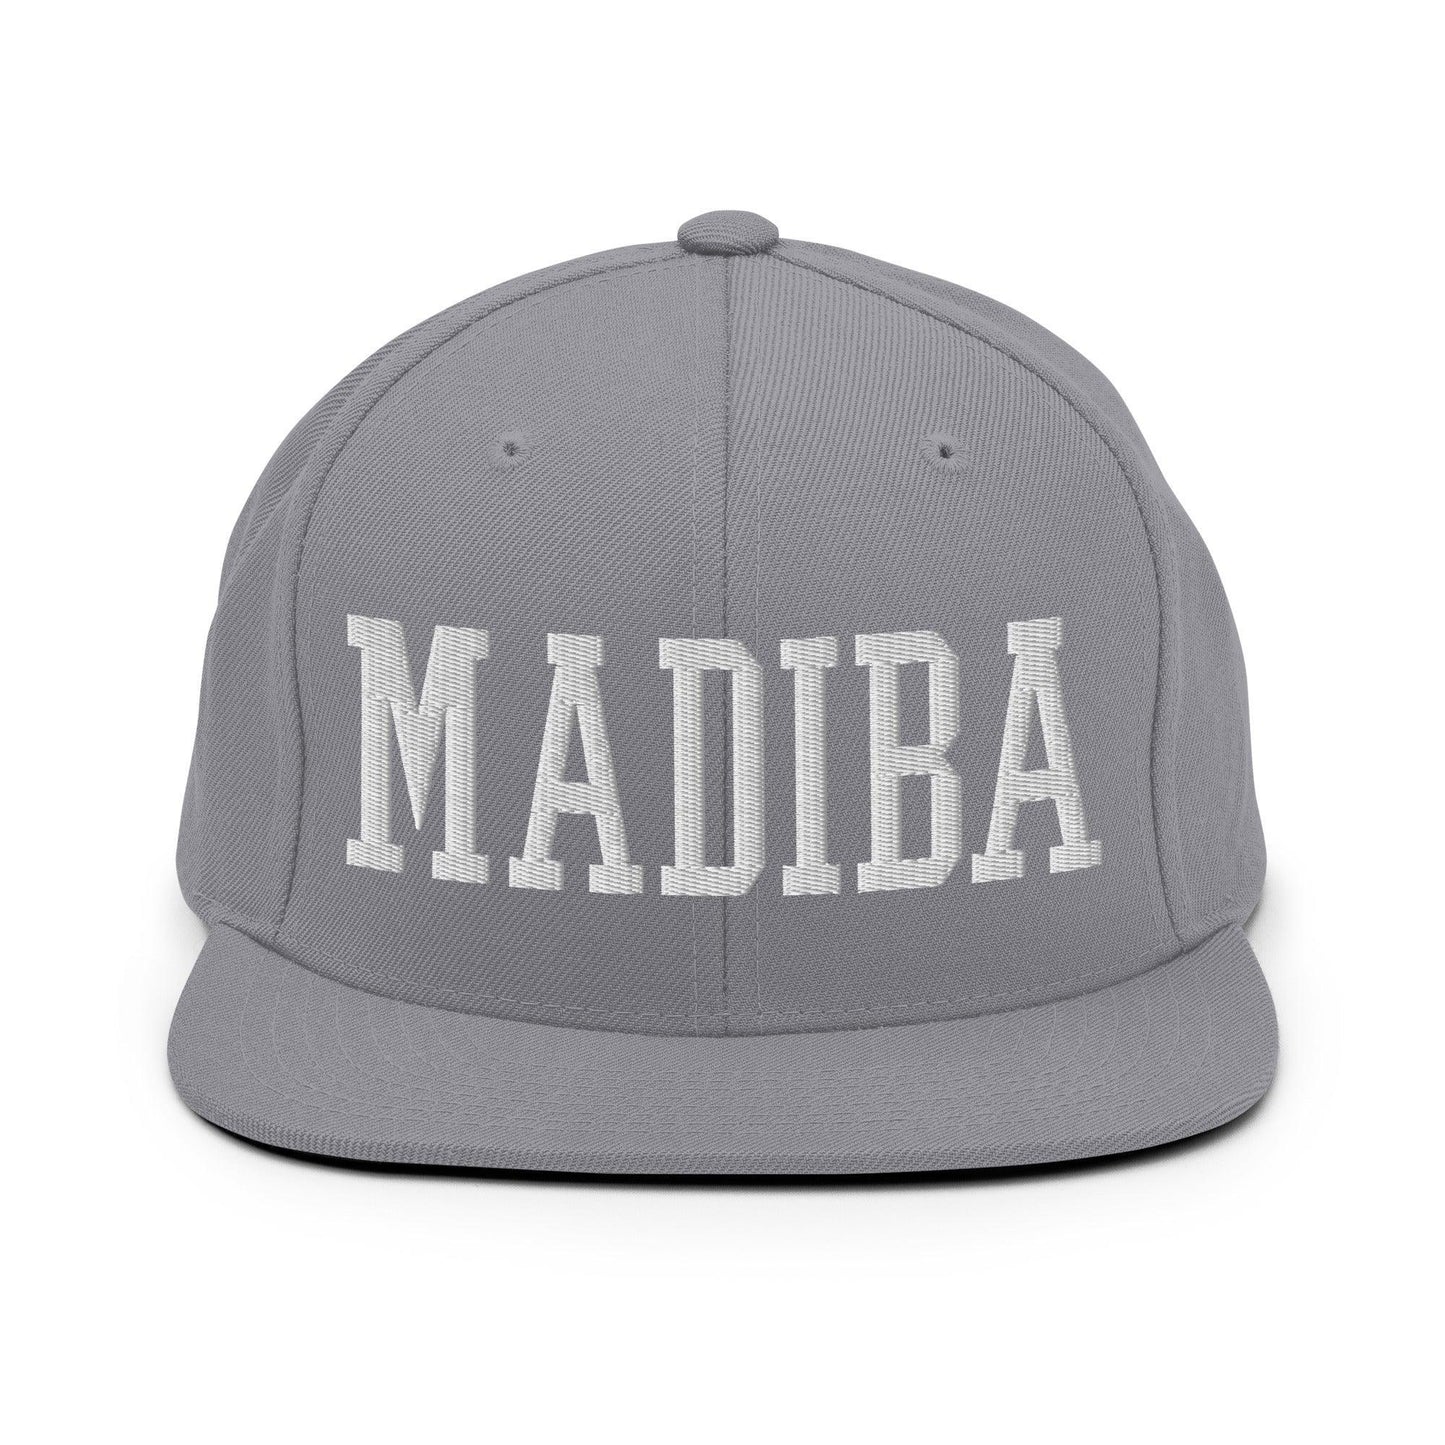 Nelson Mandela Madiba Block Snapback Hat Silver